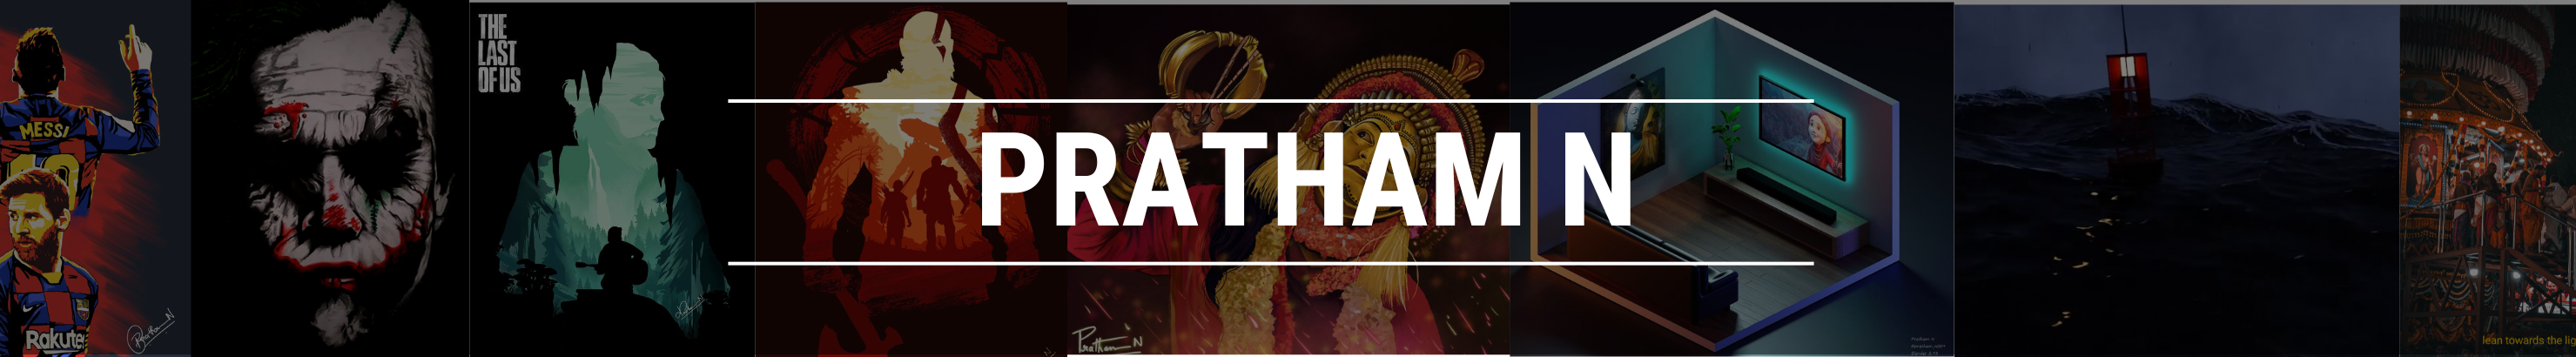 Banner de perfil de Pratham N